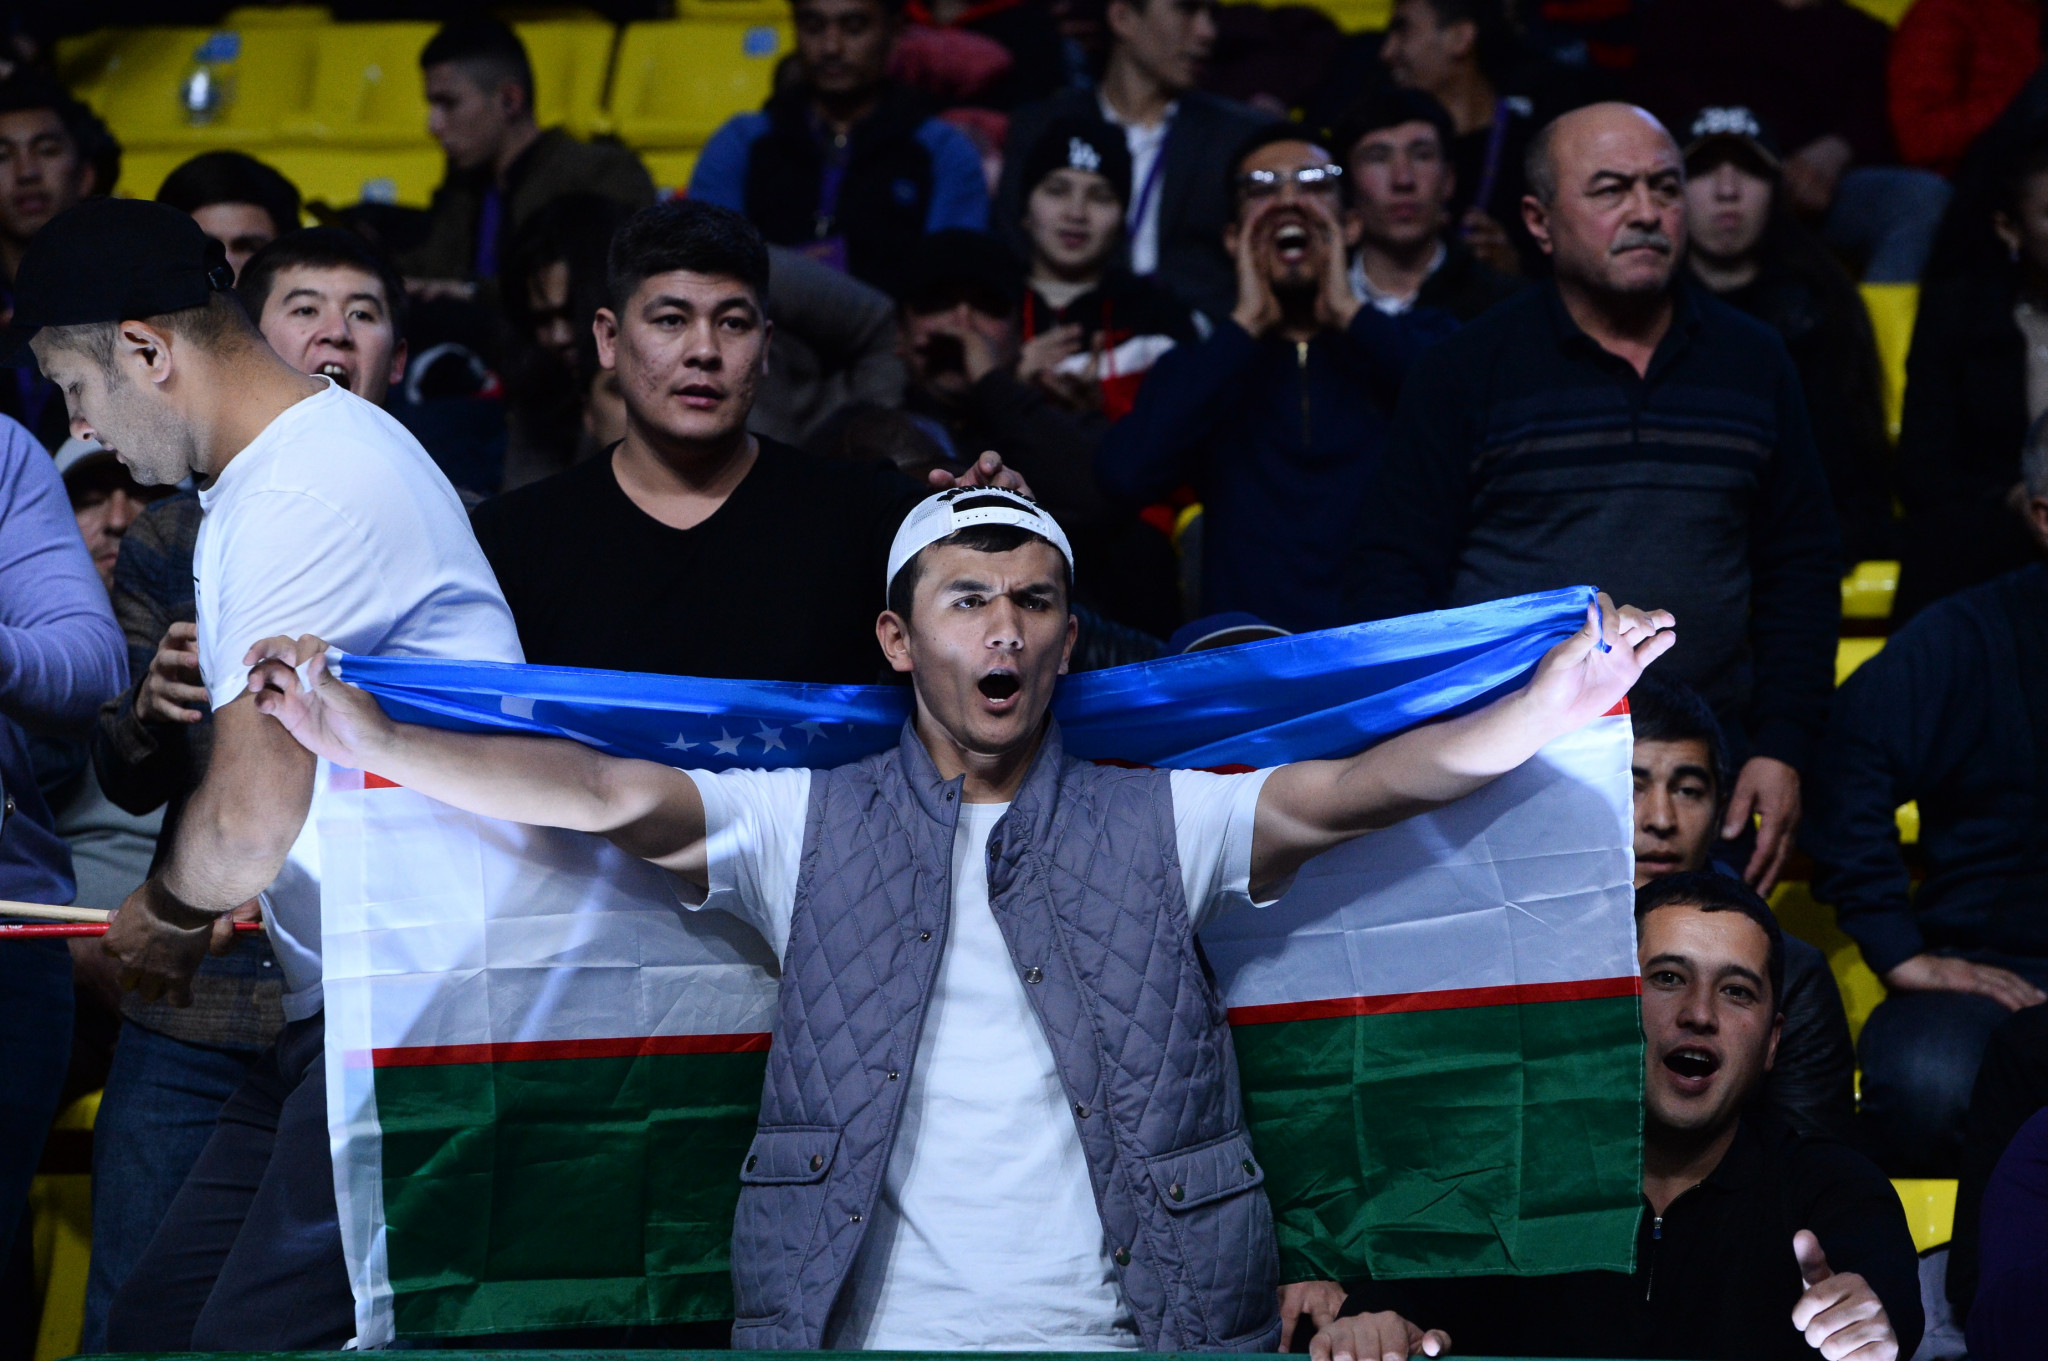 An Uzbek fan makes his voice heard during the final session in Tashkent ©FIAS